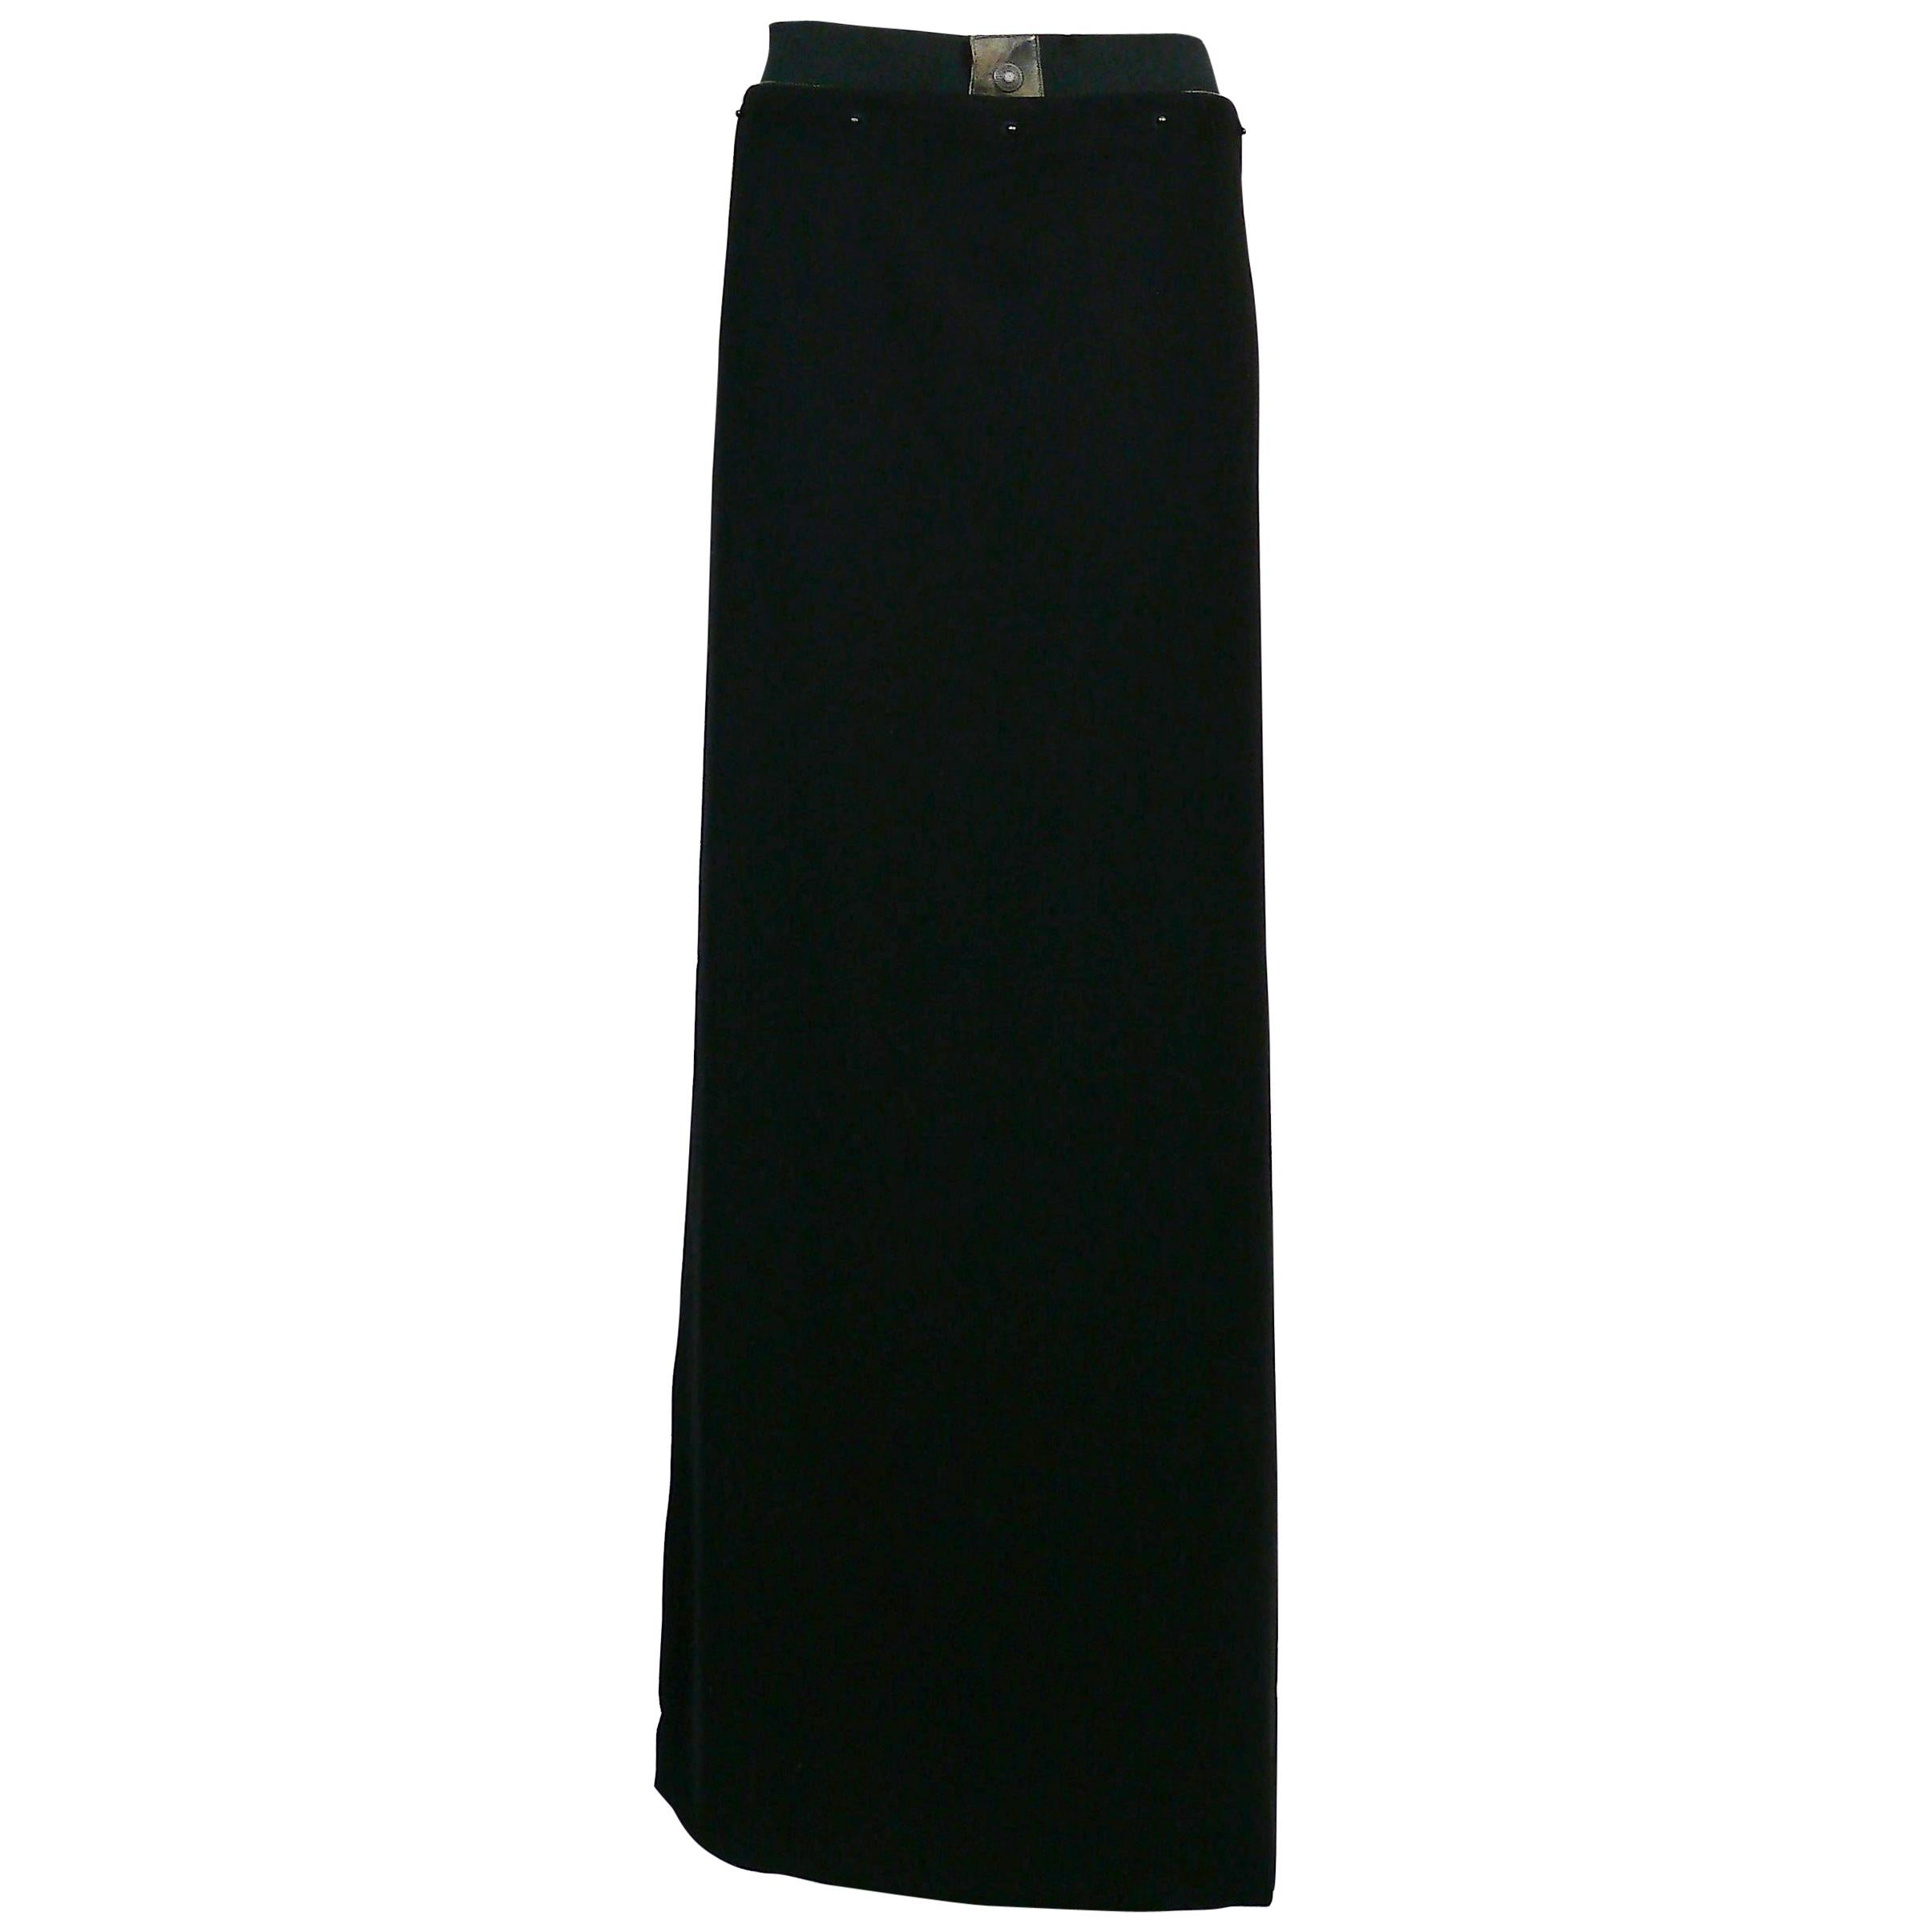 Jean Paul Gaultier Homme Vintage Black Wrap Skirt Trousers